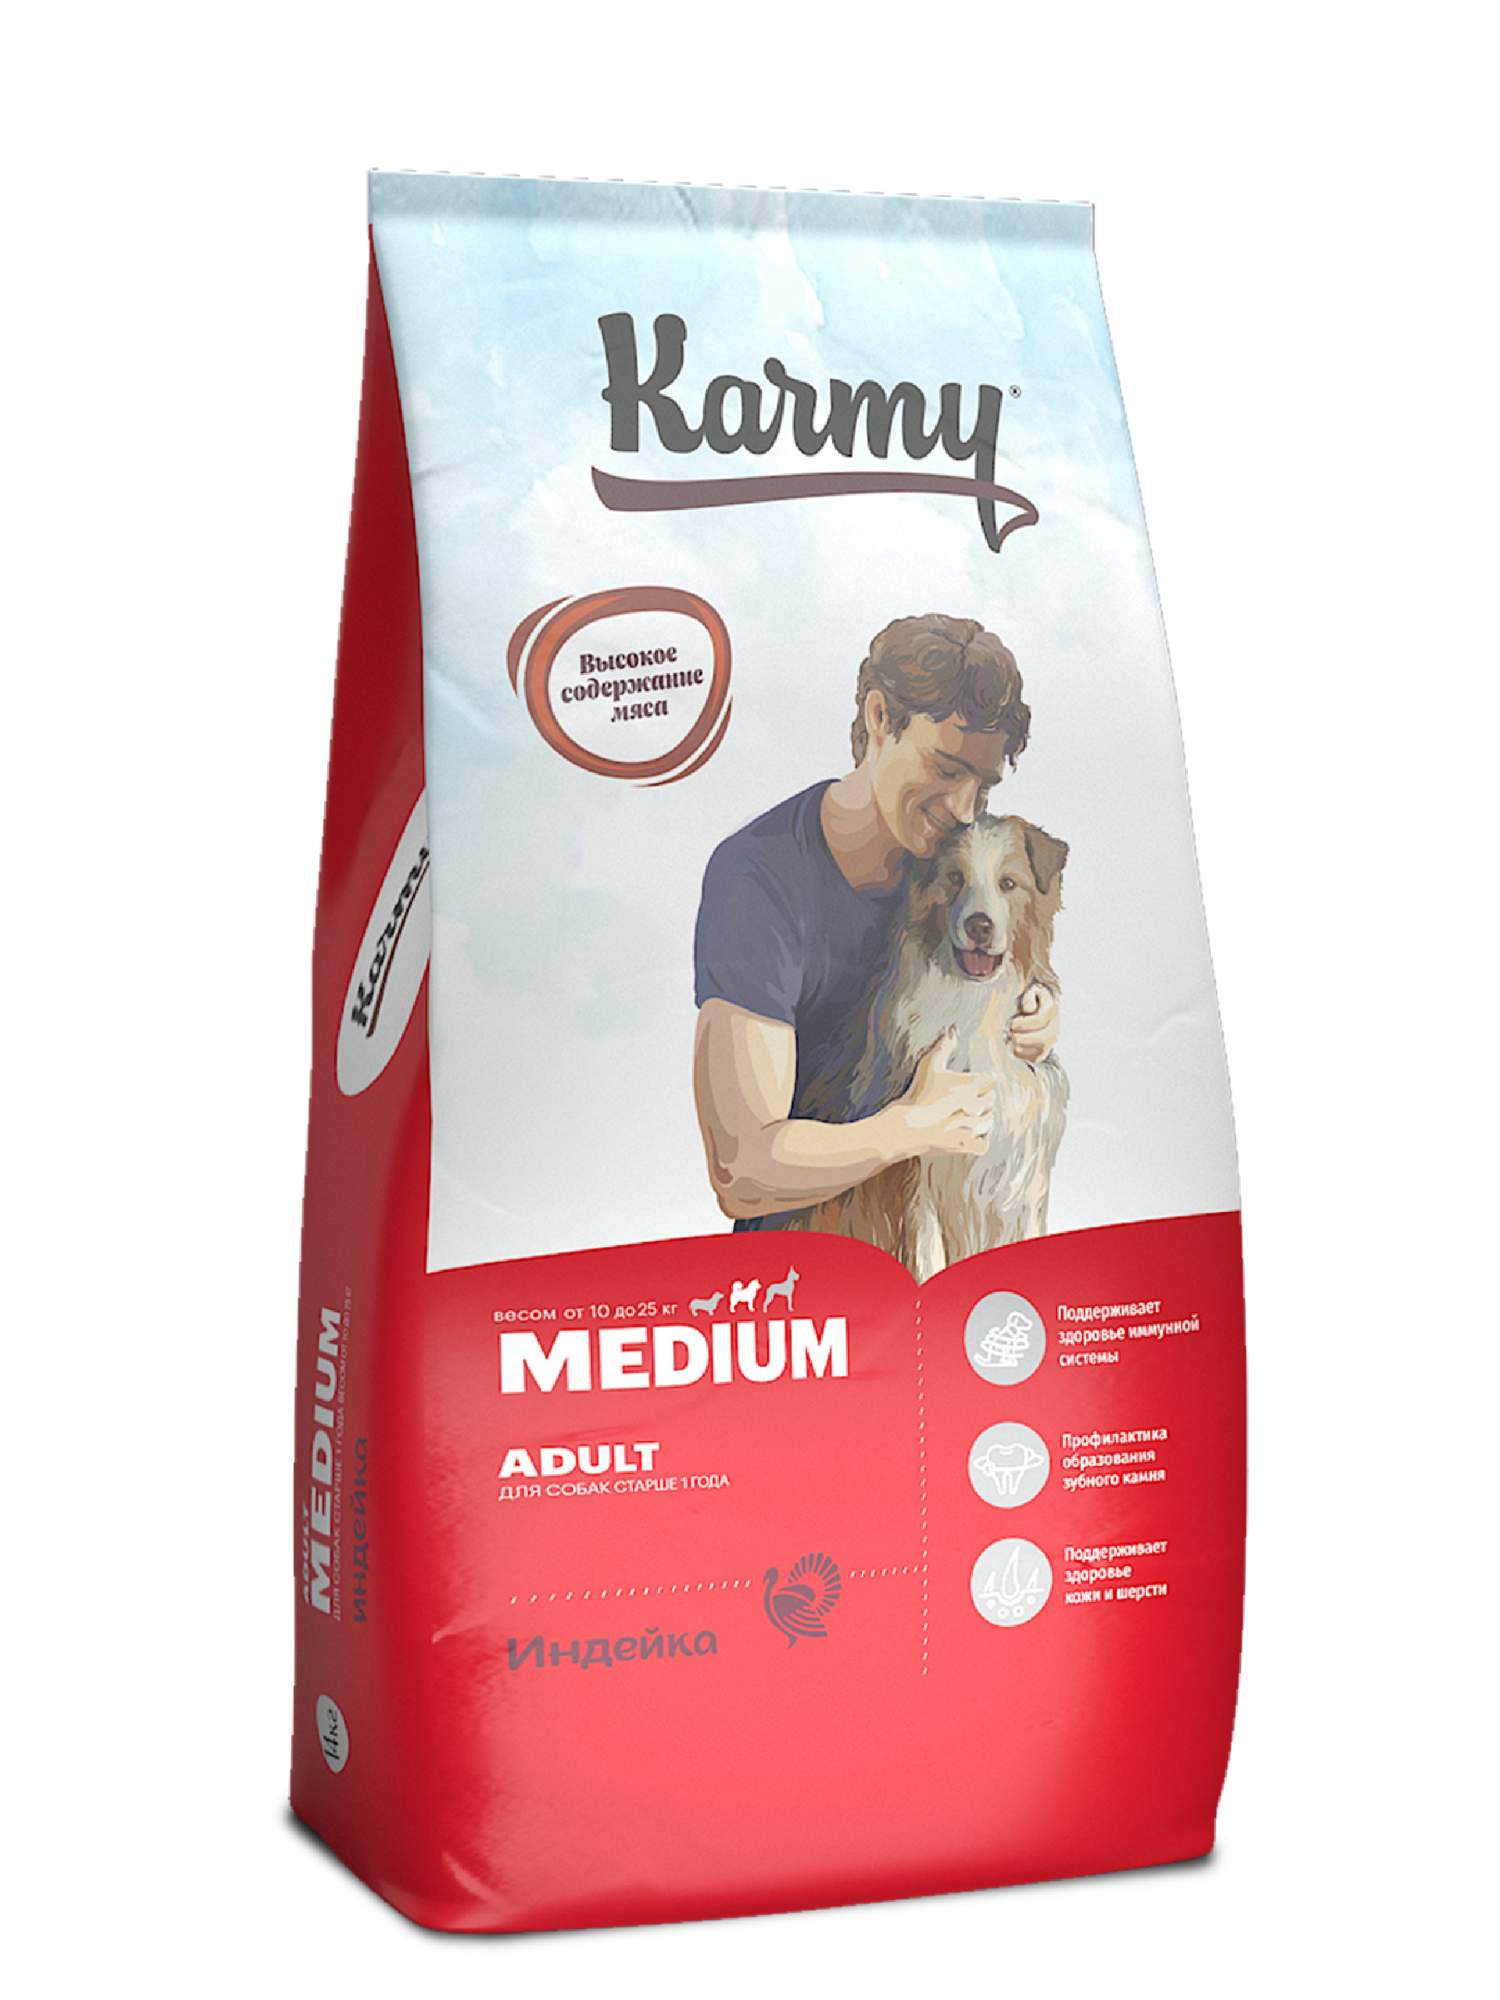 Купить сухой корм для собак KARMY Medium Adult индейка, для средних пород, 14кг, цены на Мегамаркет | Артикул: 600007561548